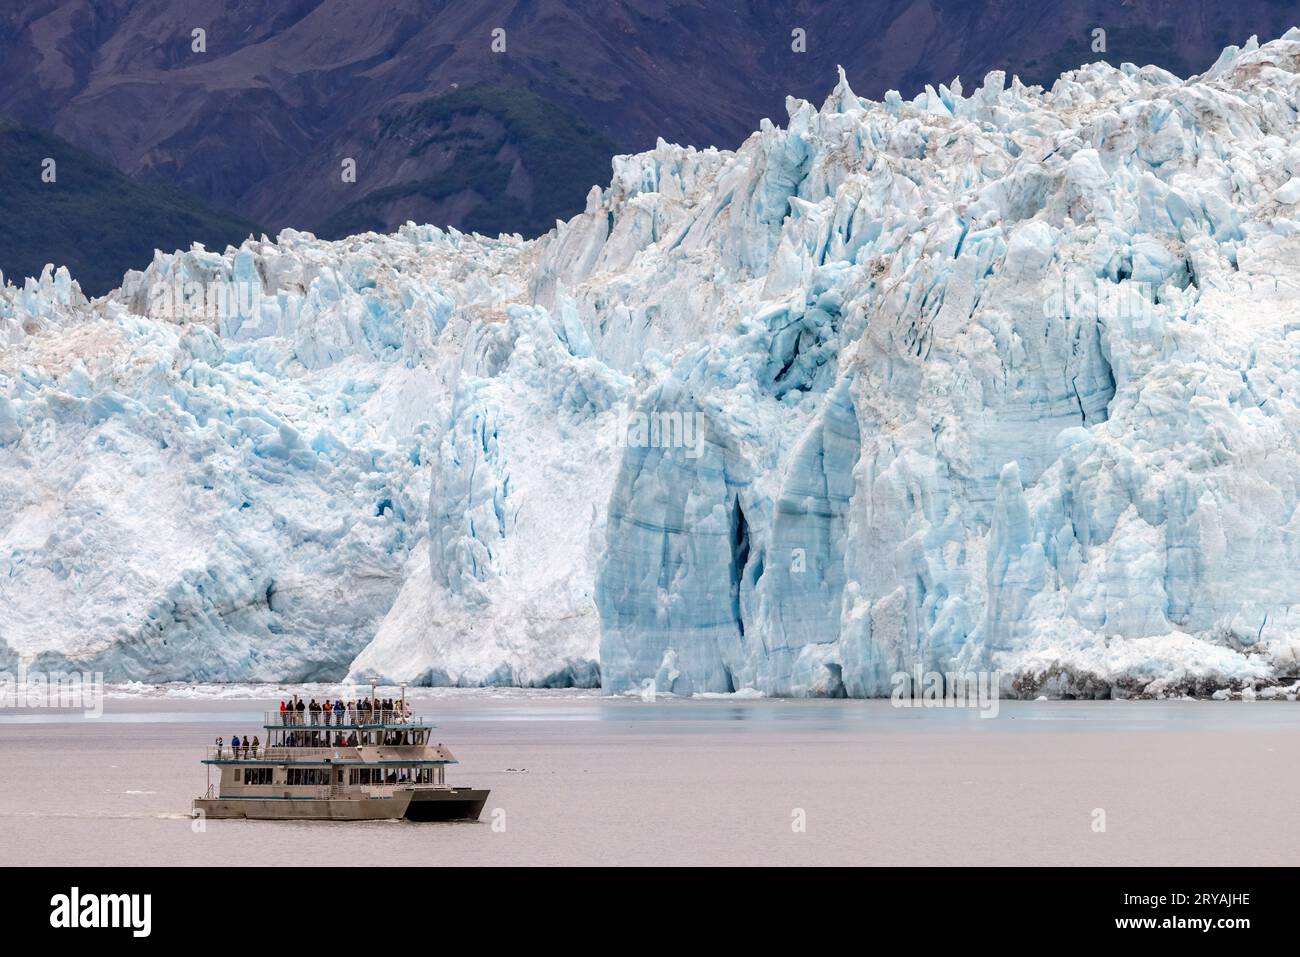 Tourist excursion vessel (St. Theodosius) near the Hubbard Glacier in Disenchantment Bay, Alaska, USA Stock Photo